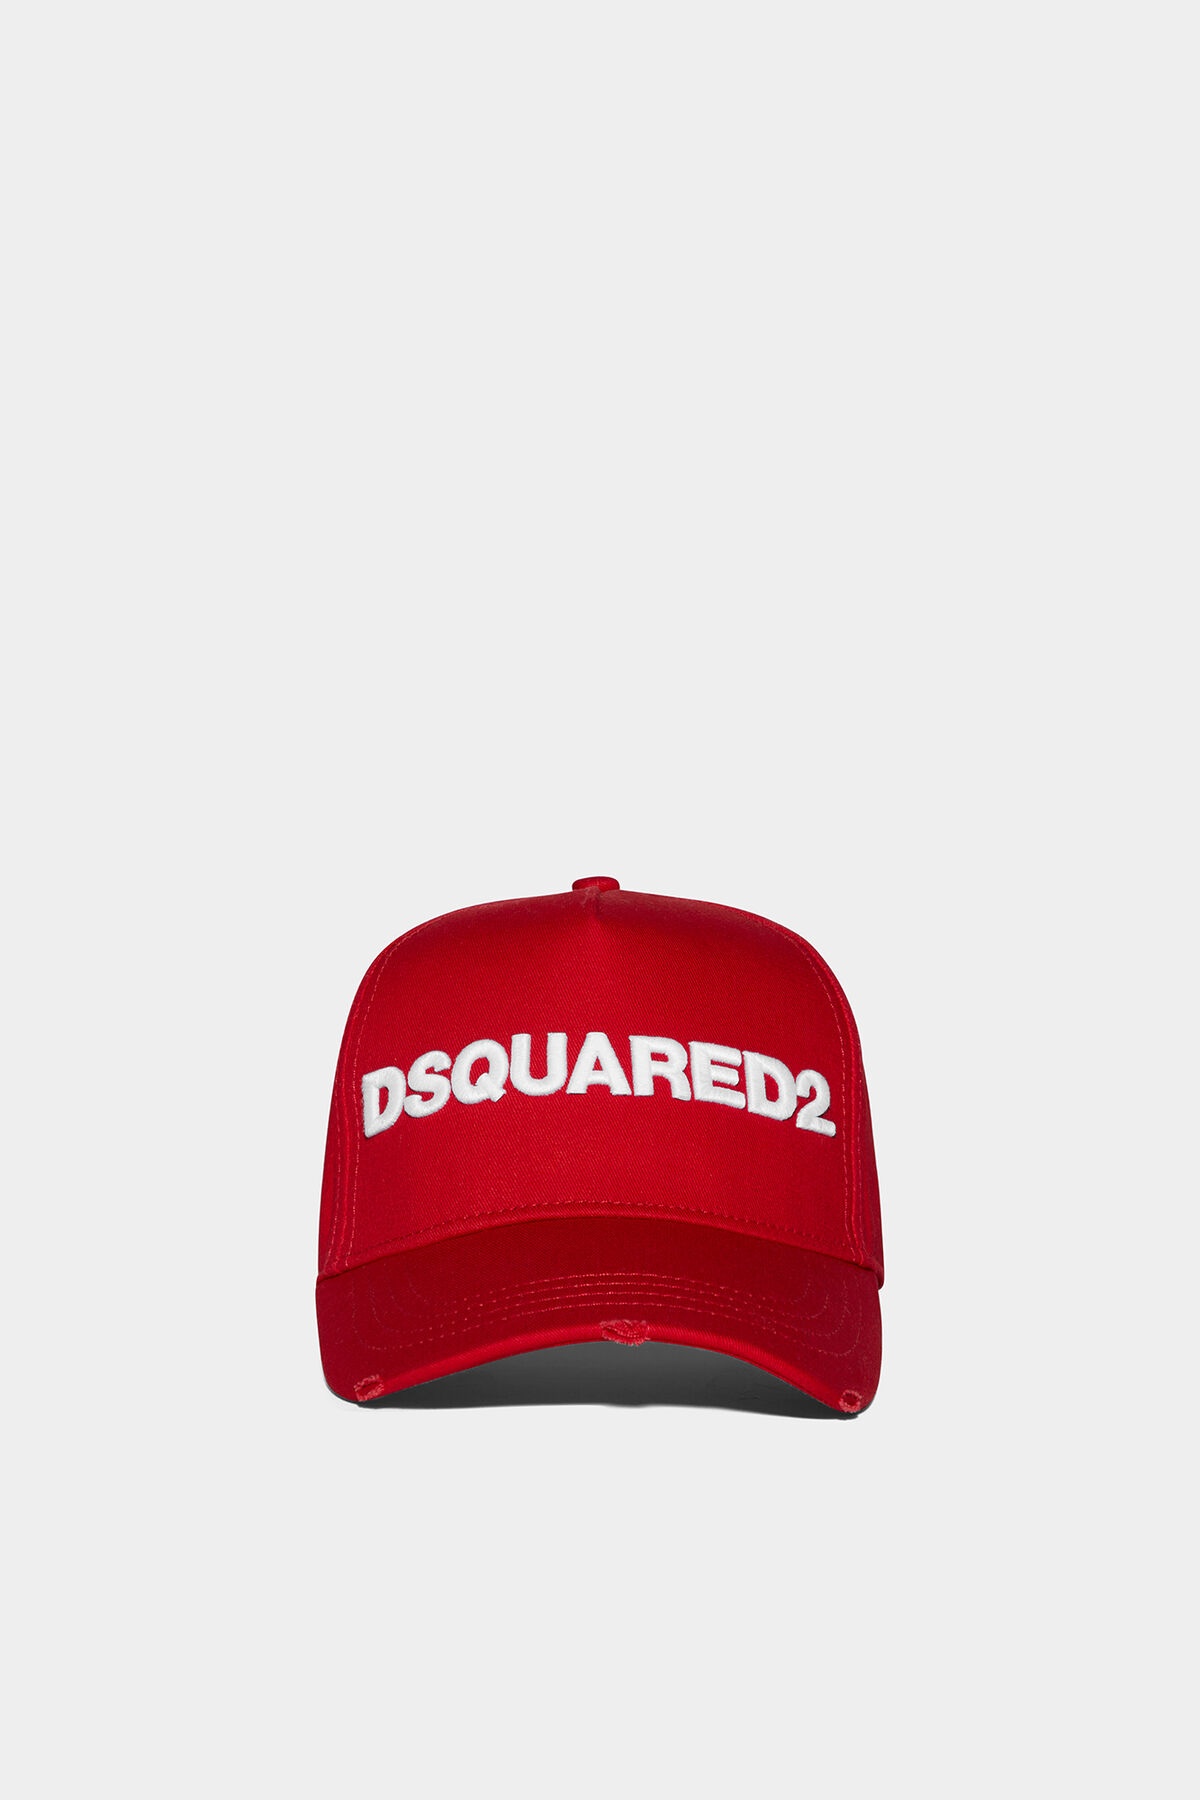 DSQUARED2 BASEBALL CAP - 1